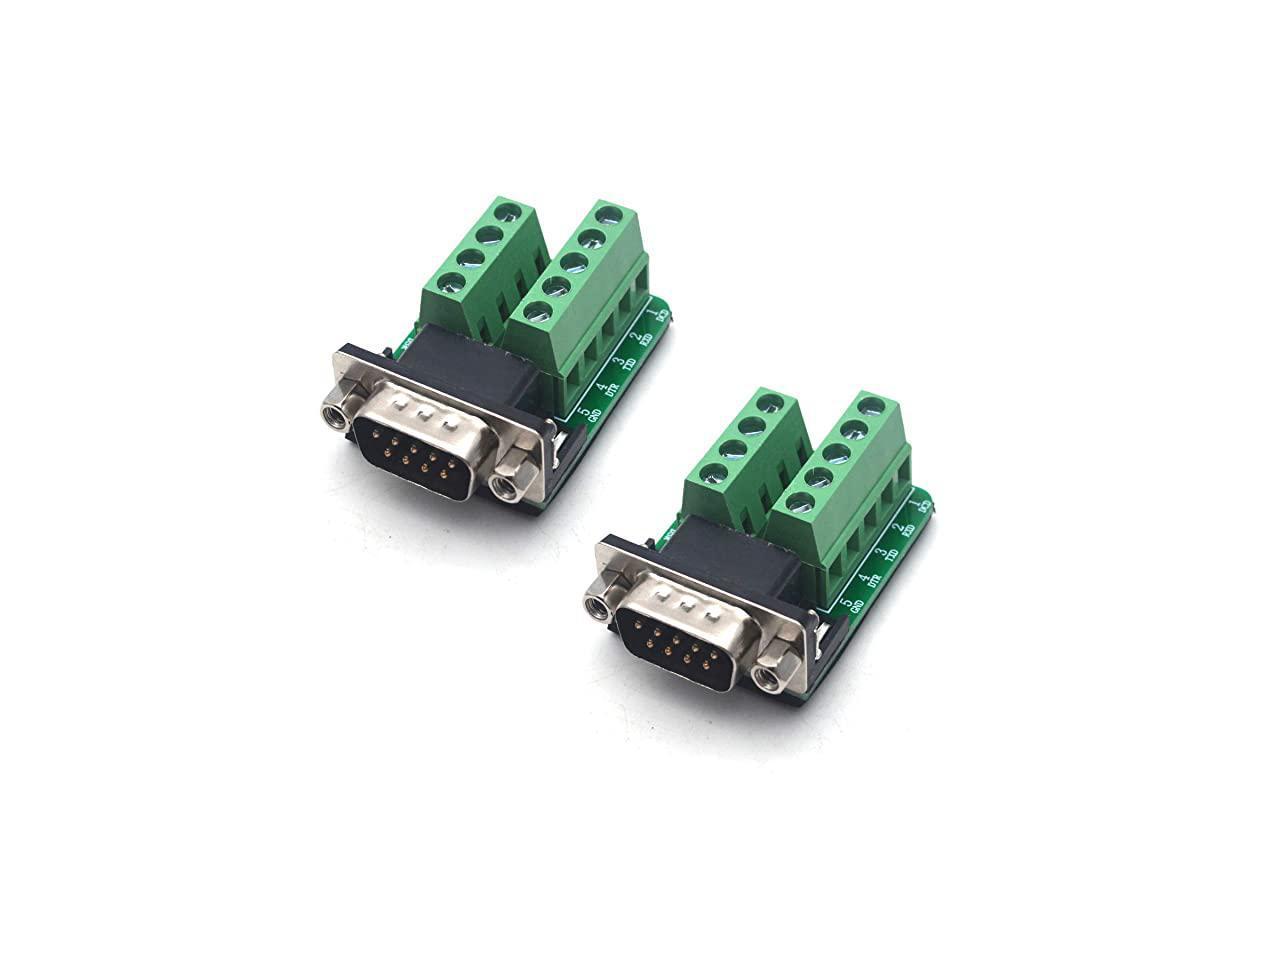 Db9 male Signals Terminal modules Adaptateur rs232 Serial to Terminal db9 Connector